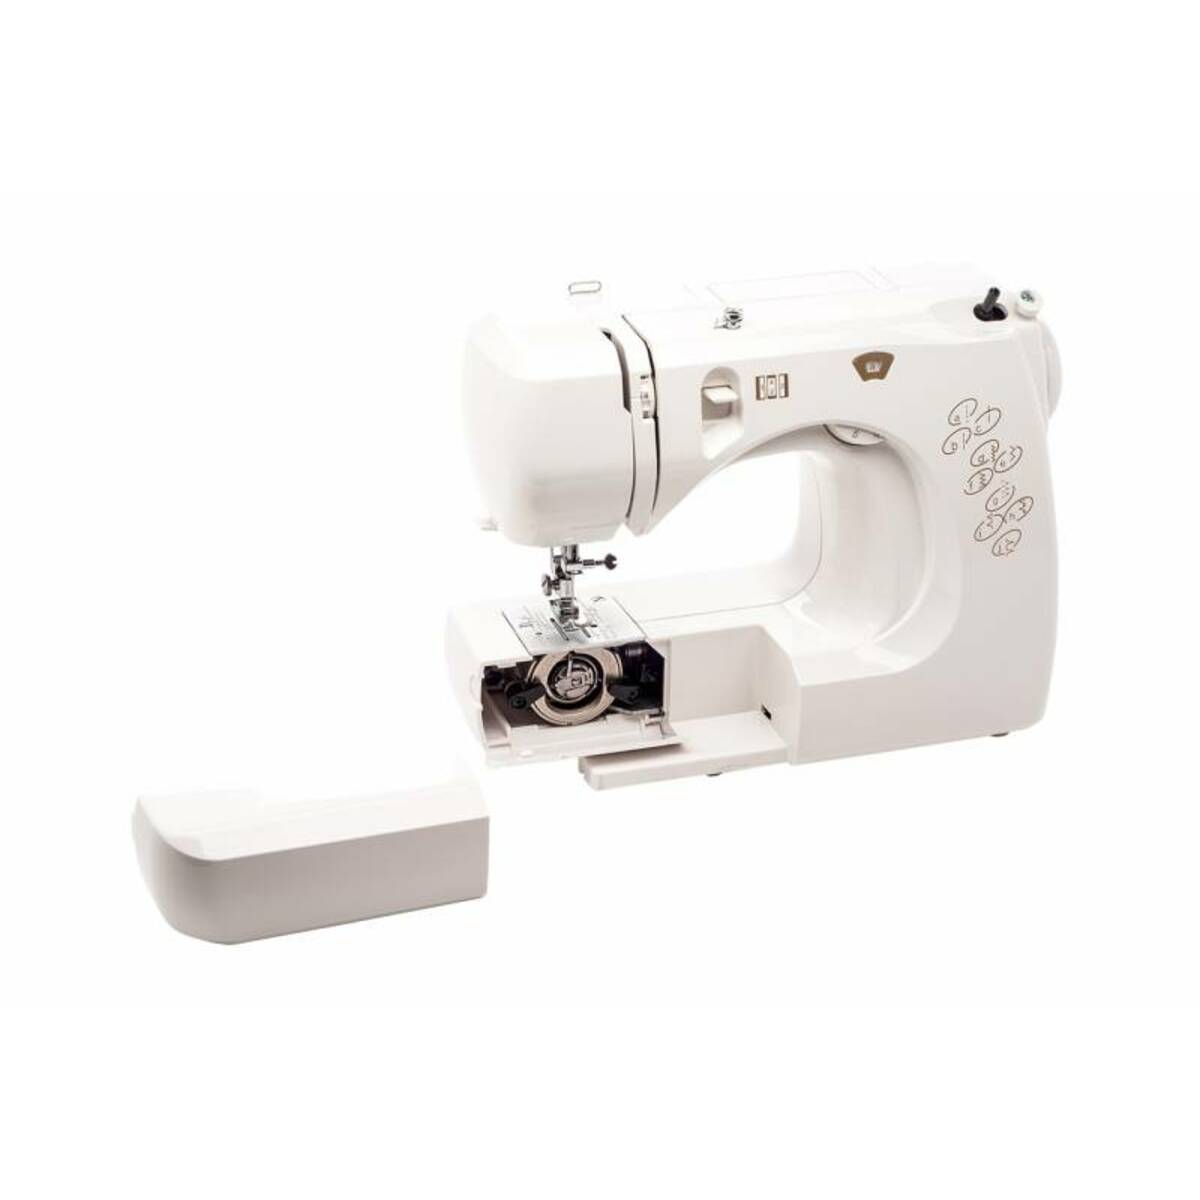 Швейная машина Comfort 12 (Цвет: White)